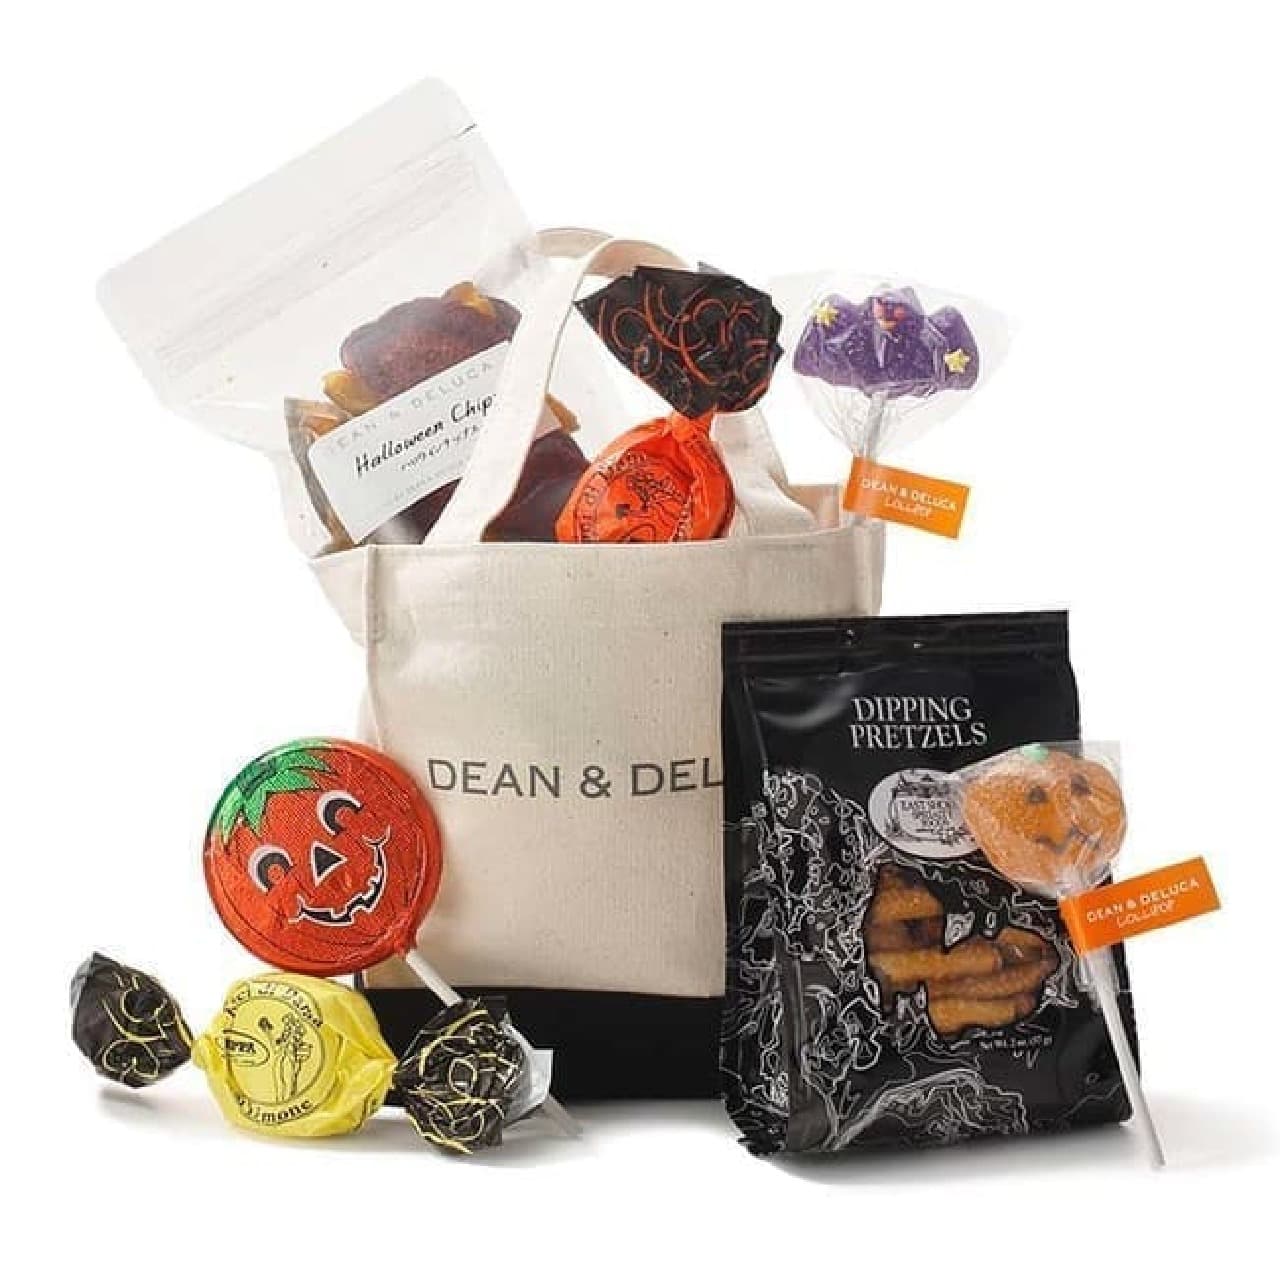 Halloween items from DEAN & DELUCA